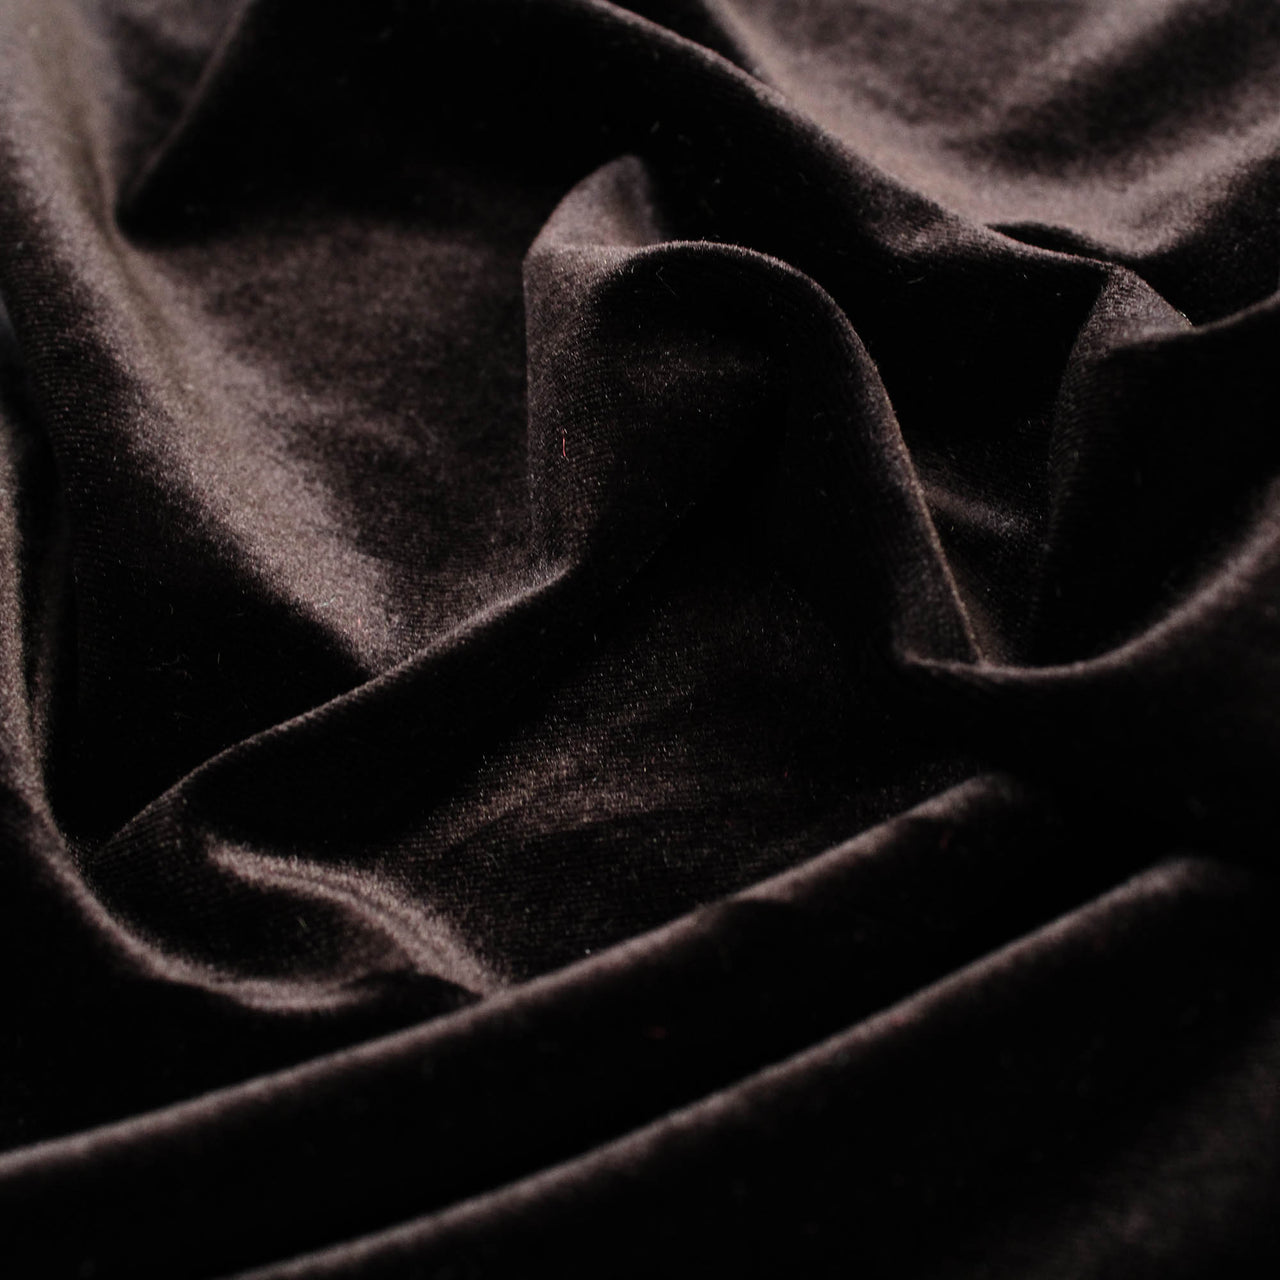 Black - Spandex Velvet Fabric (4 Way Stretch) - Superior Quality for Dance & Leotards